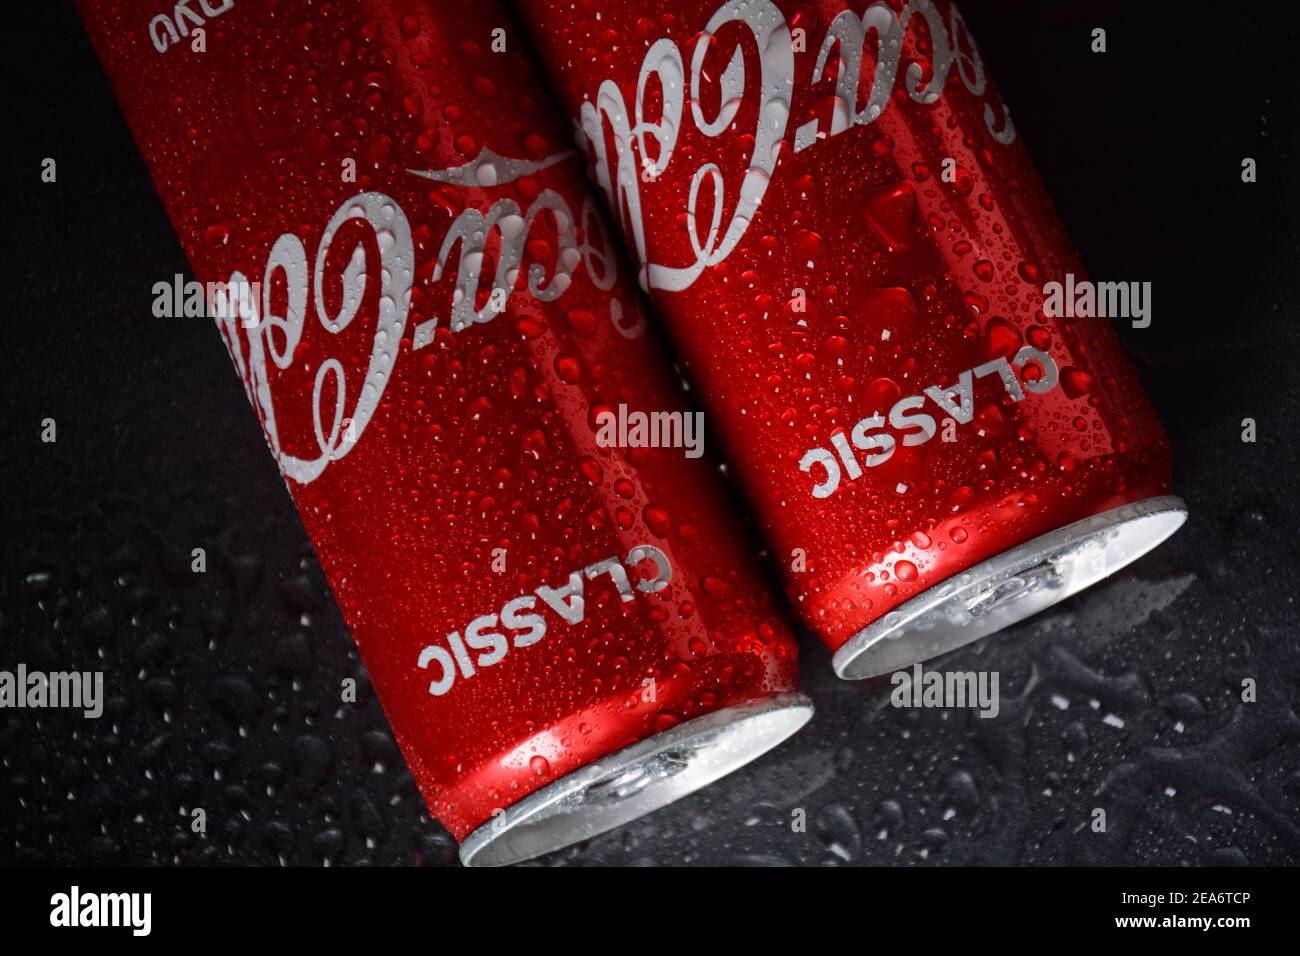 Israel coca cola Israel with